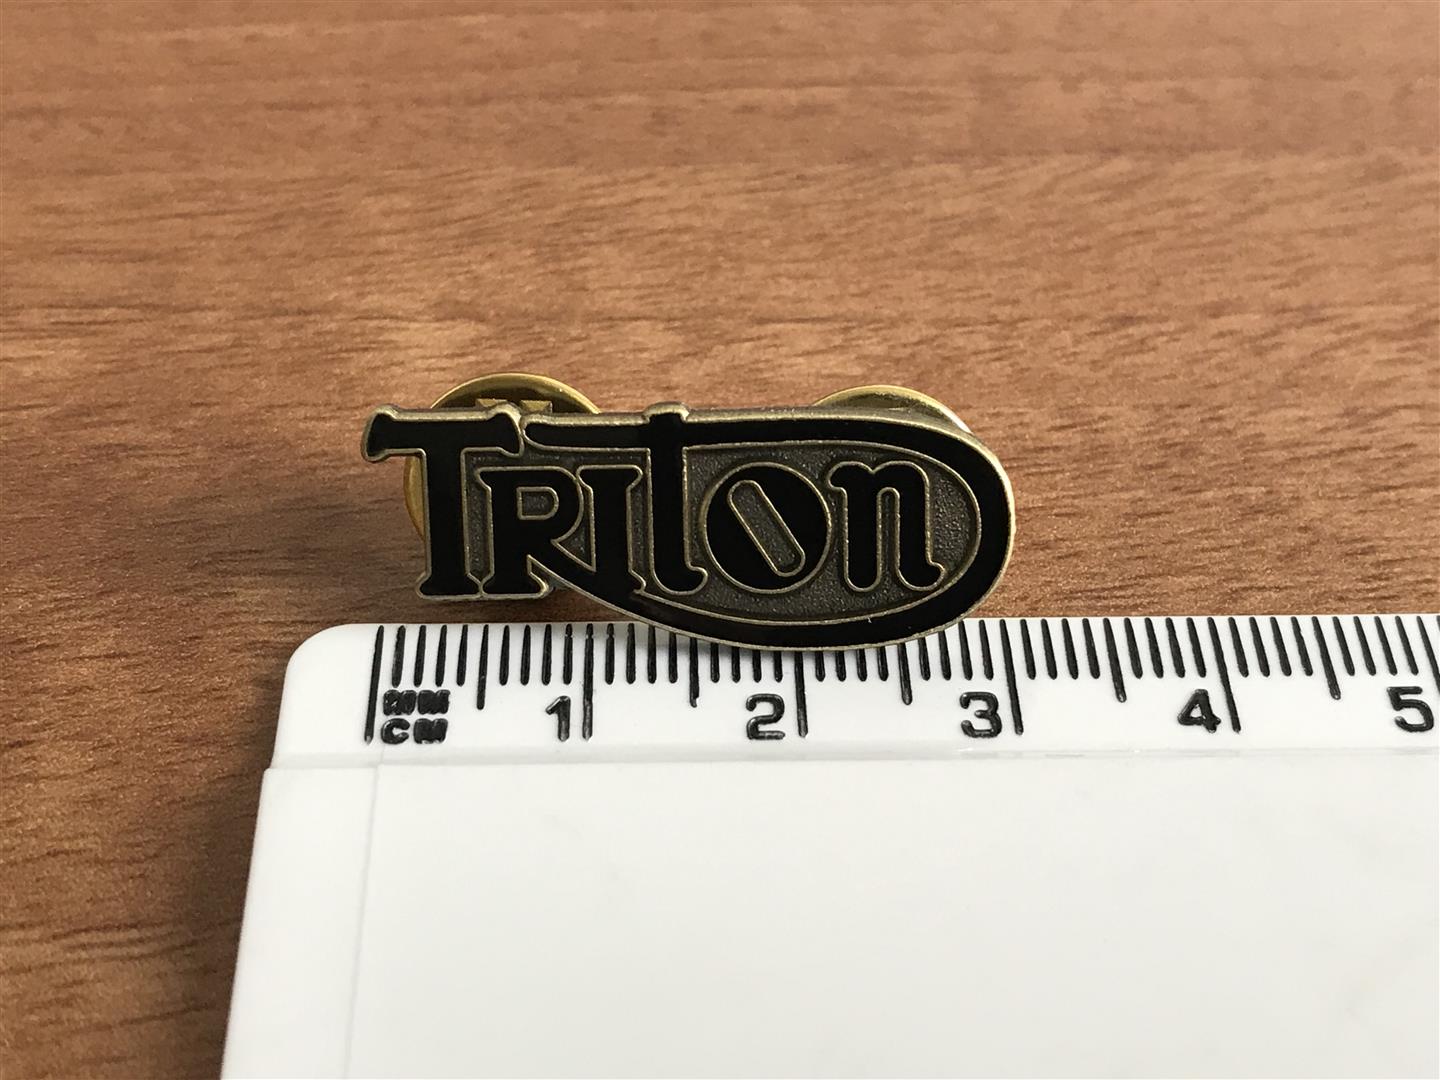 Triton Enamel Pin badge